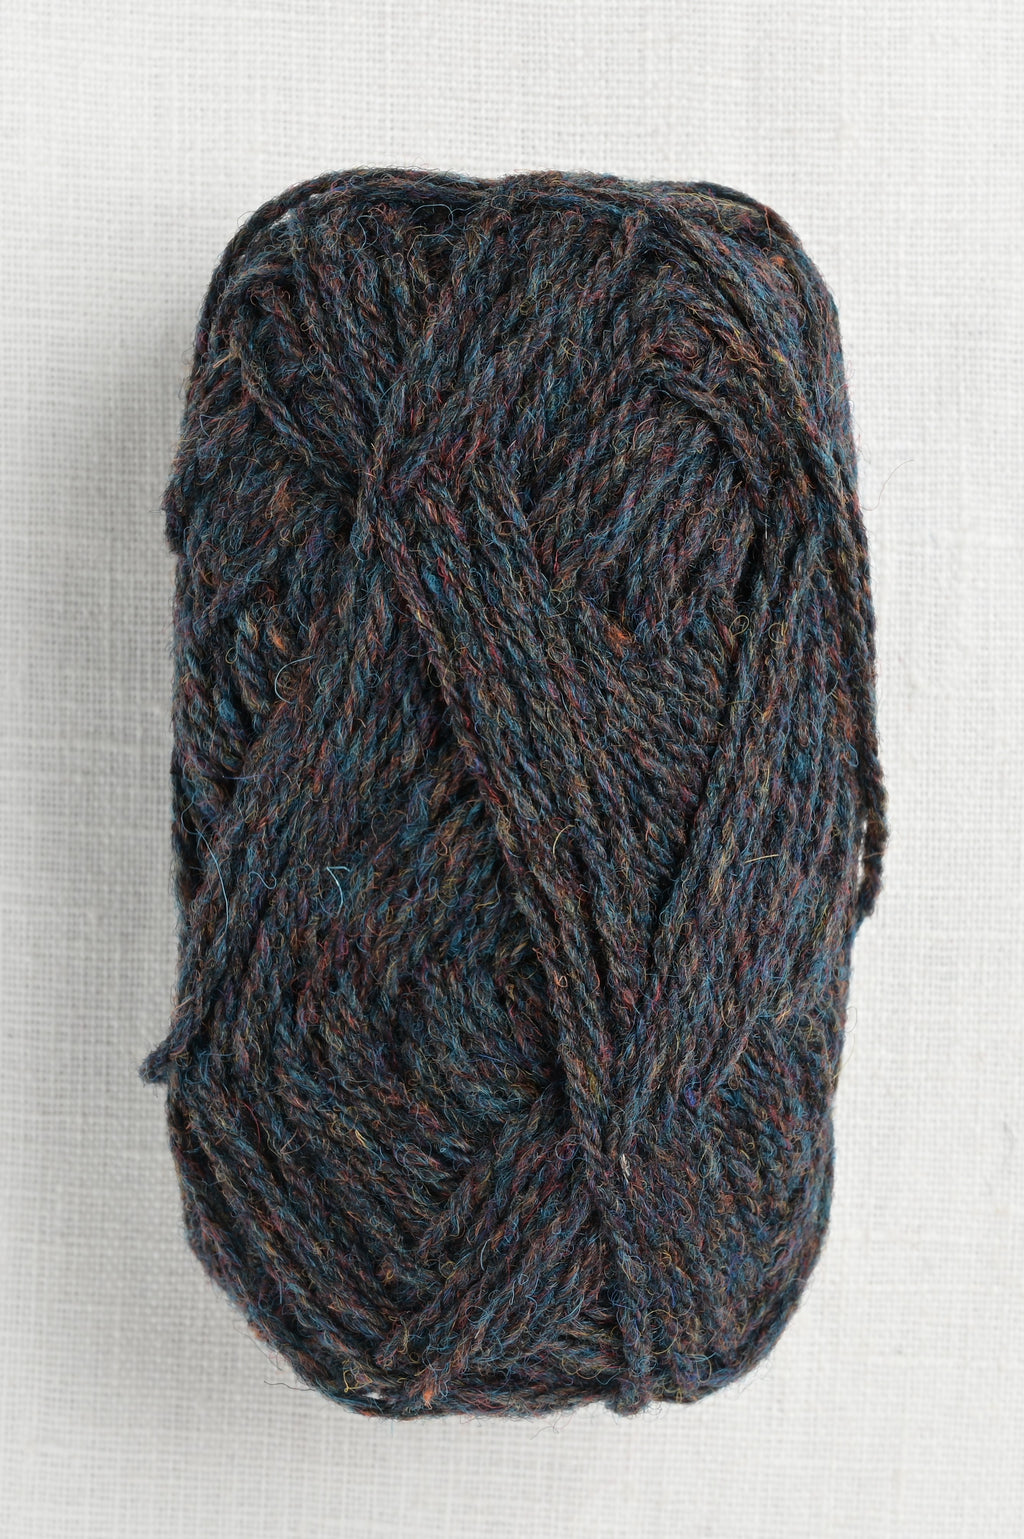 jamieson's shetland double knitting 236 rosewood